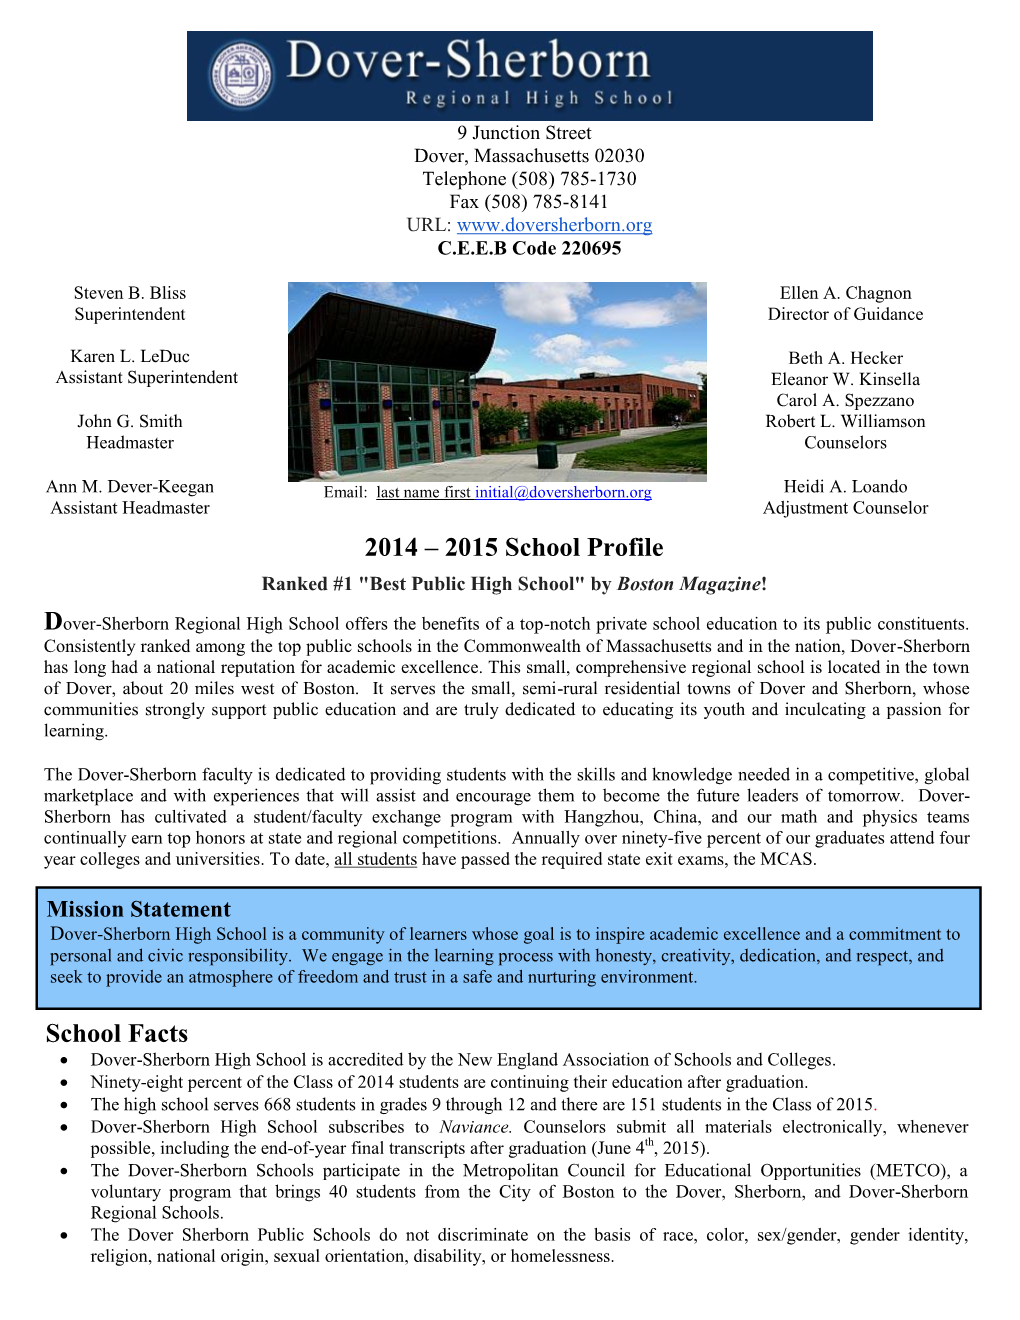 School Facts 2014 – 2015 School Profile